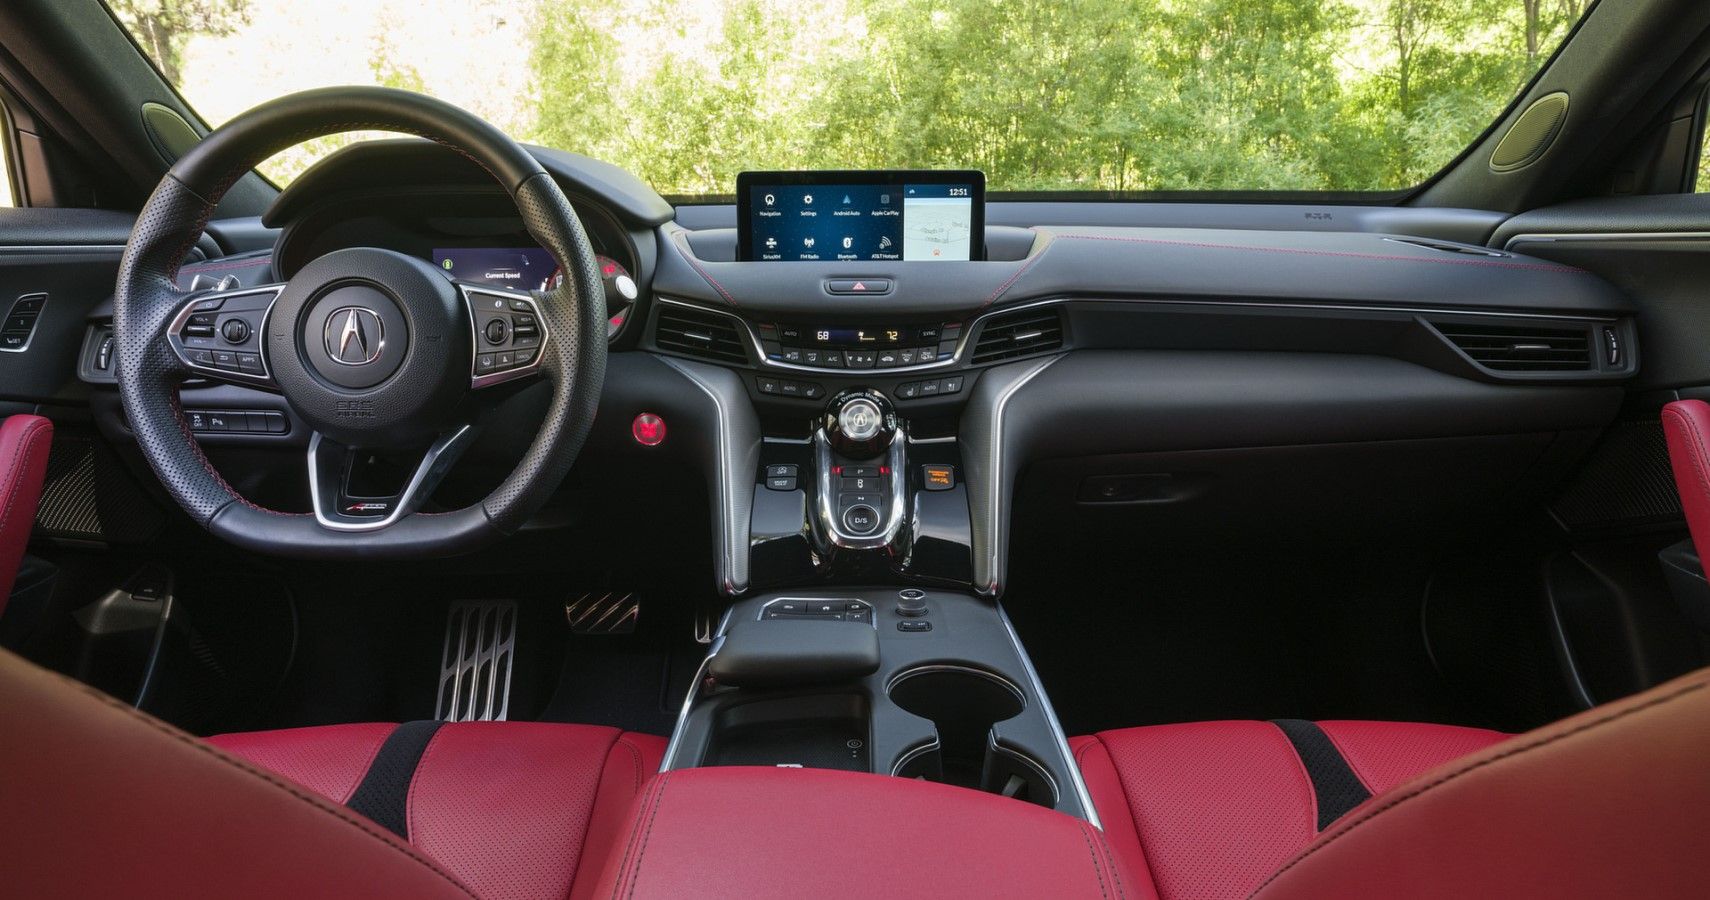 Acura TLX interior dashboard view